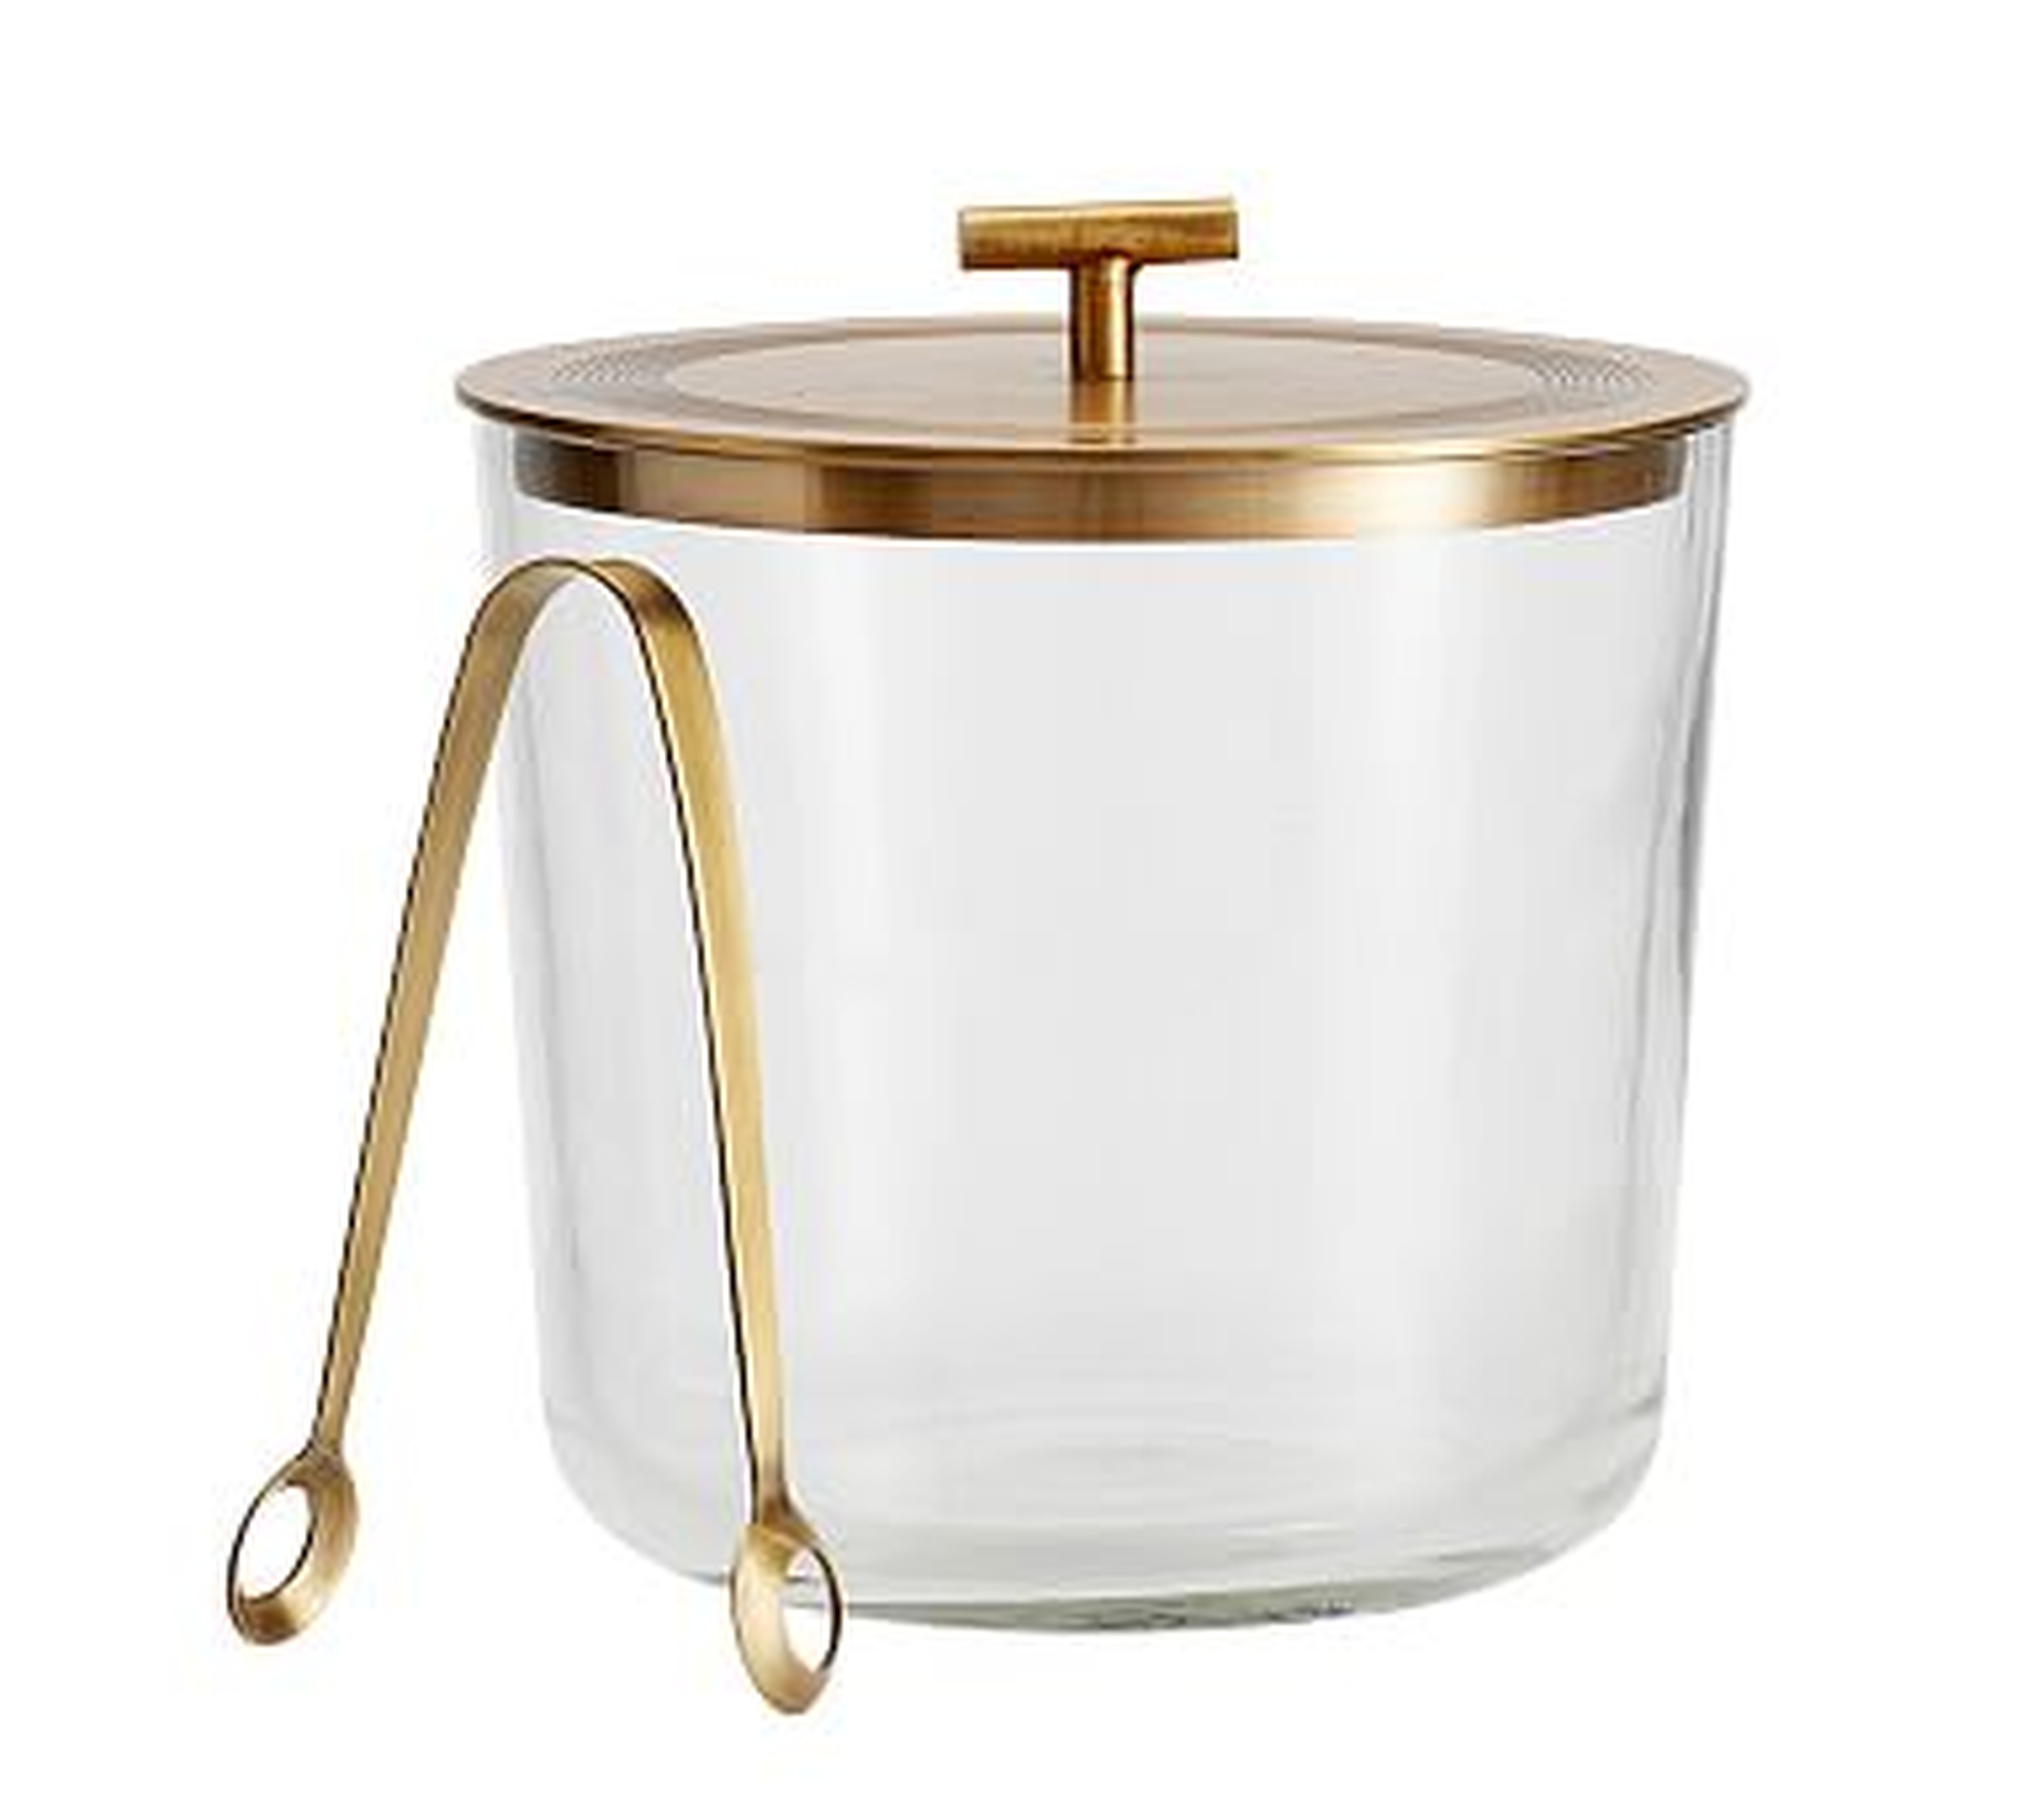 Bleecker Bar Ice Bucket - Antiqued Gold - Pottery Barn